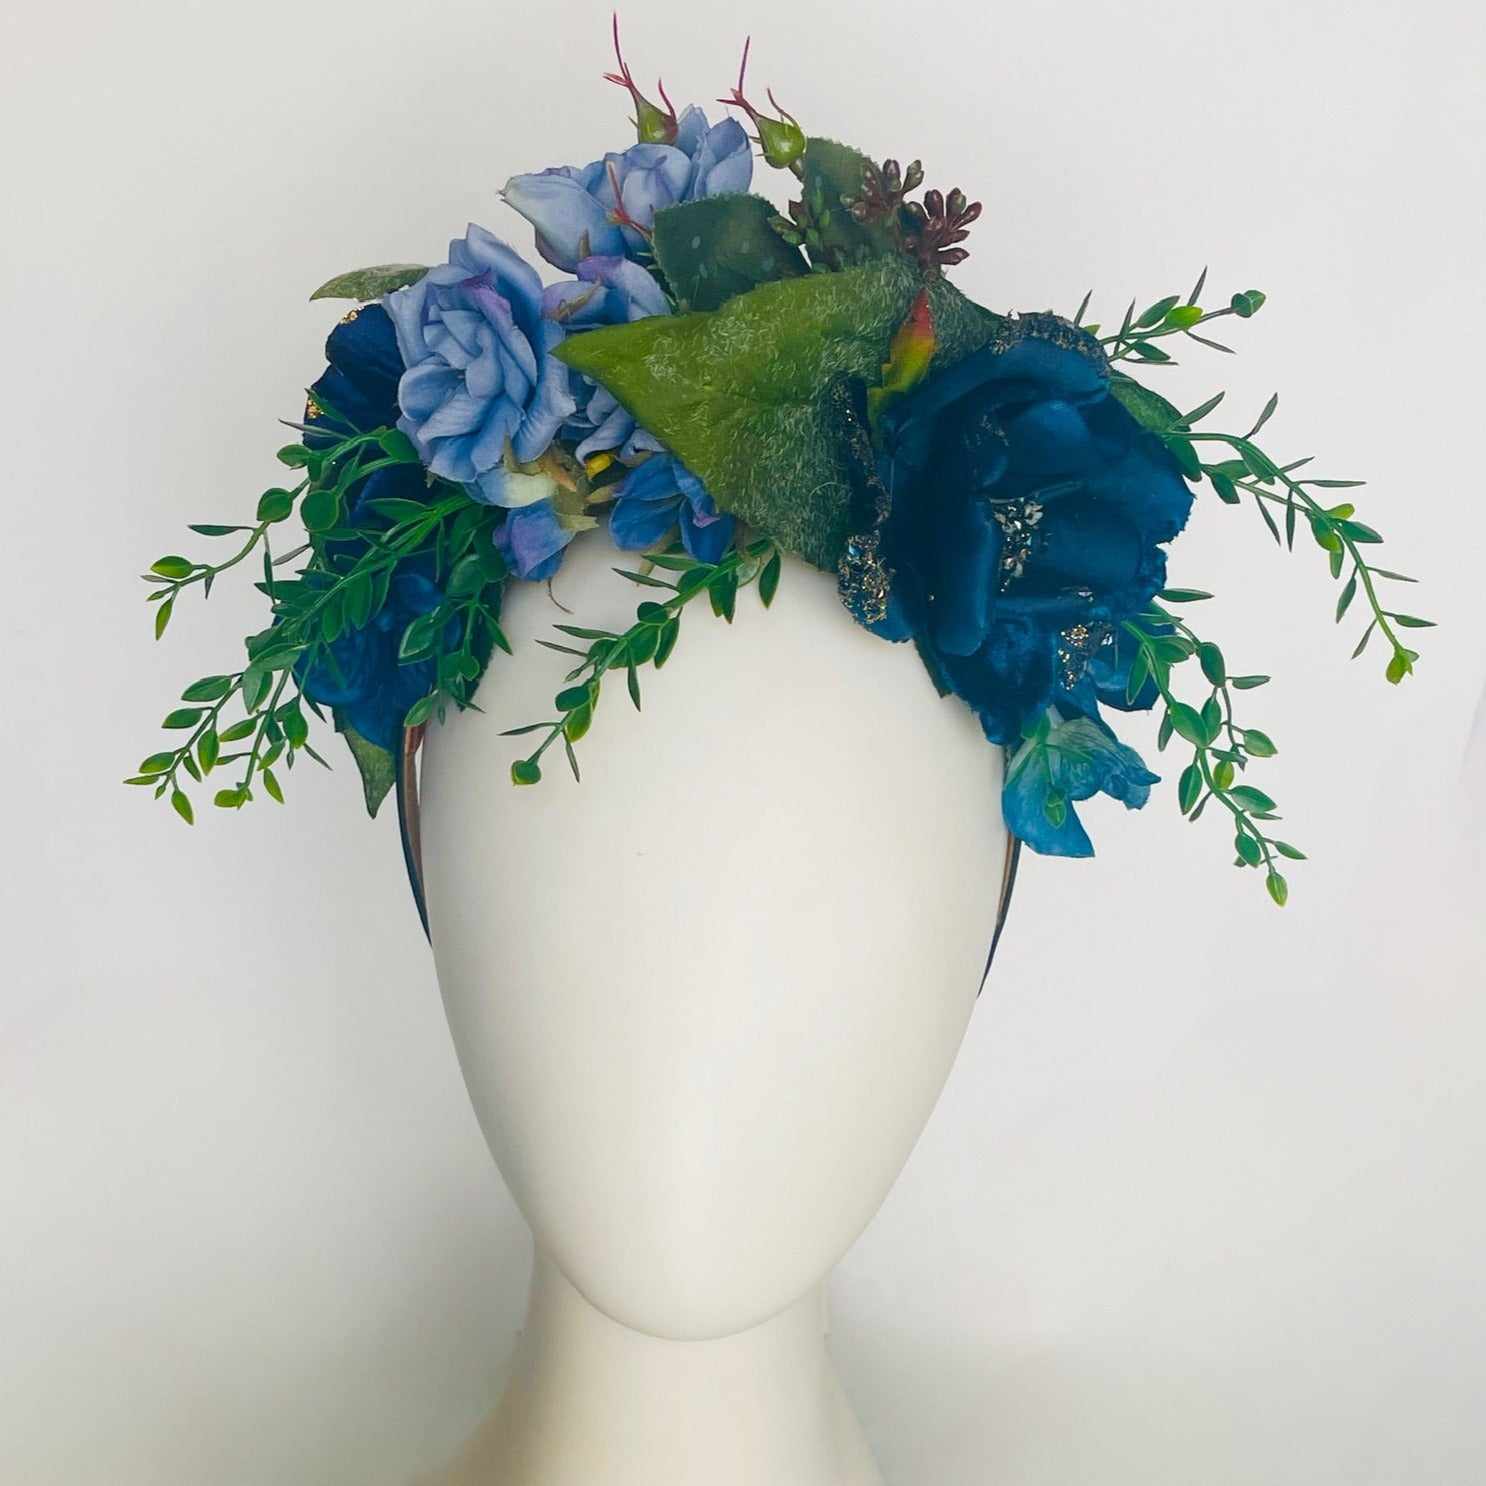 Las Ofrendas One of a Kind Light Blue, Dark Blue & Green  Frida Kahlo Inspired Flower Crown Headpiece - Las Ofrendas 